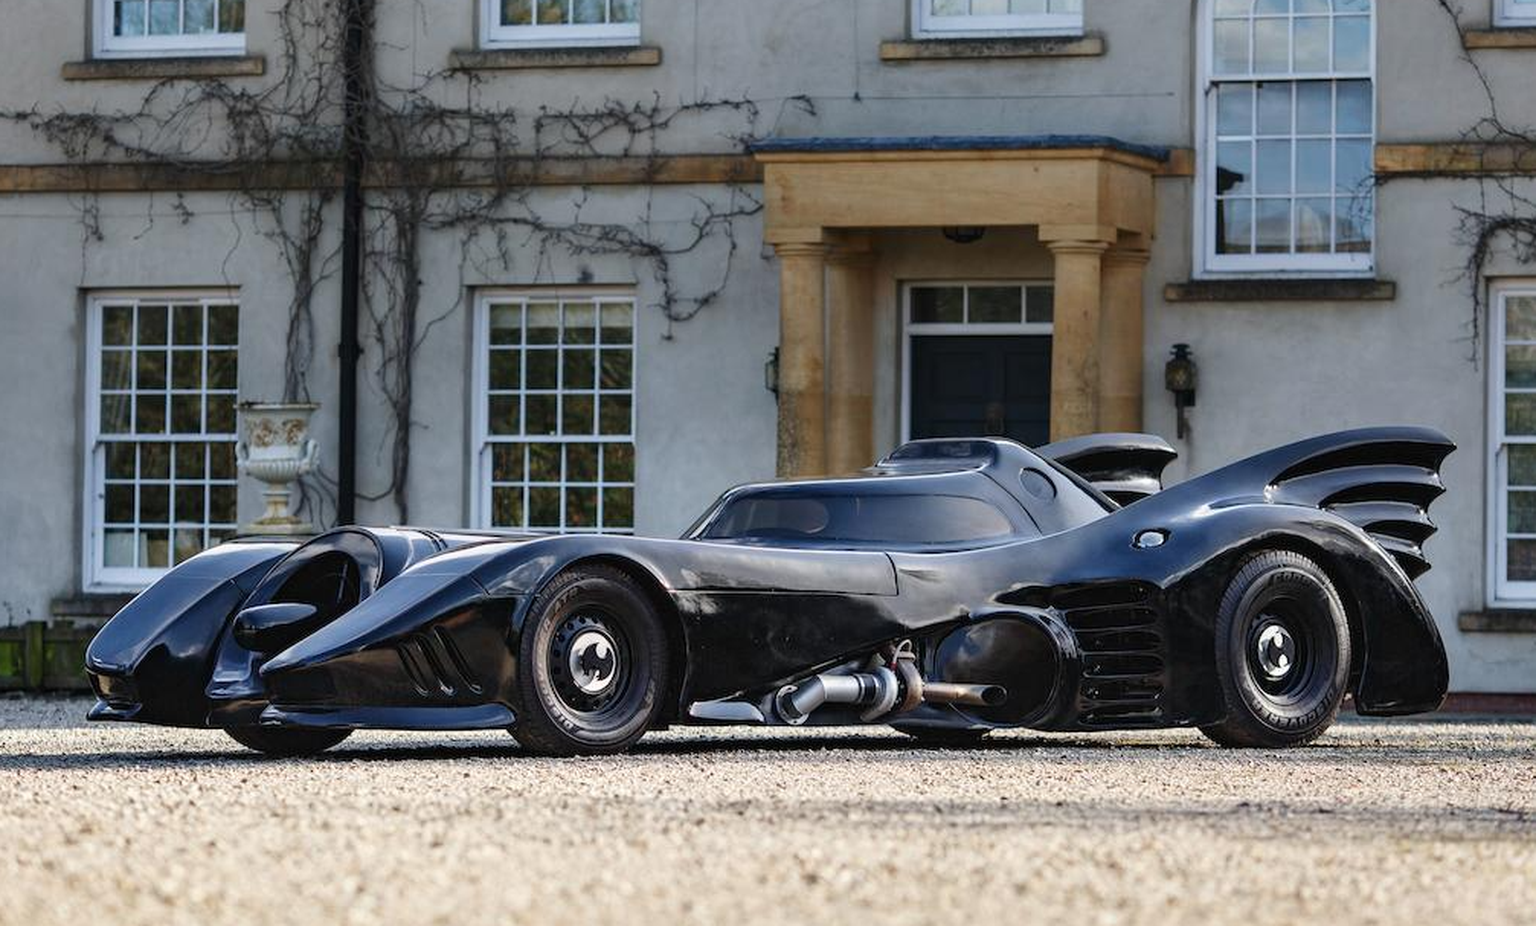 Z Cars Batmobile Replika Auto retro https://www.bonhams.com/auctions/26807/lot/89/